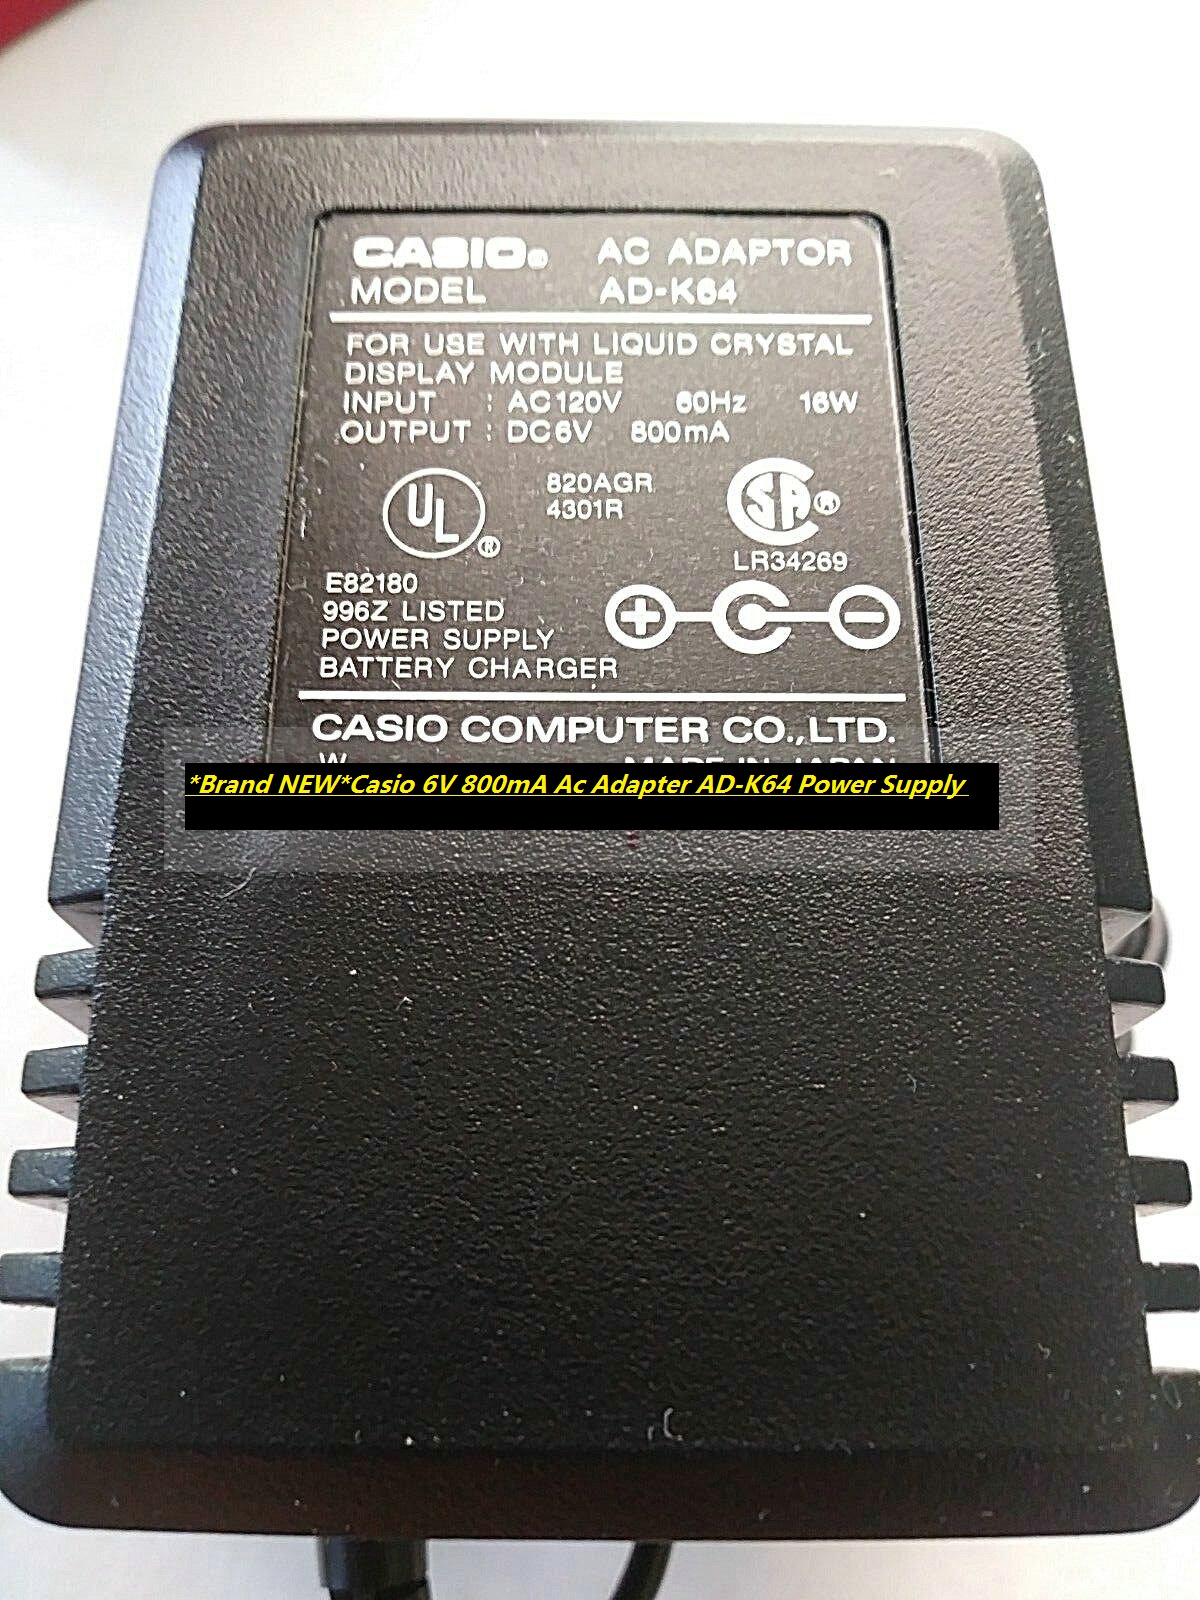 *Brand NEW*Casio 6V 800mA Ac Adapter AD-K64 Power Supply